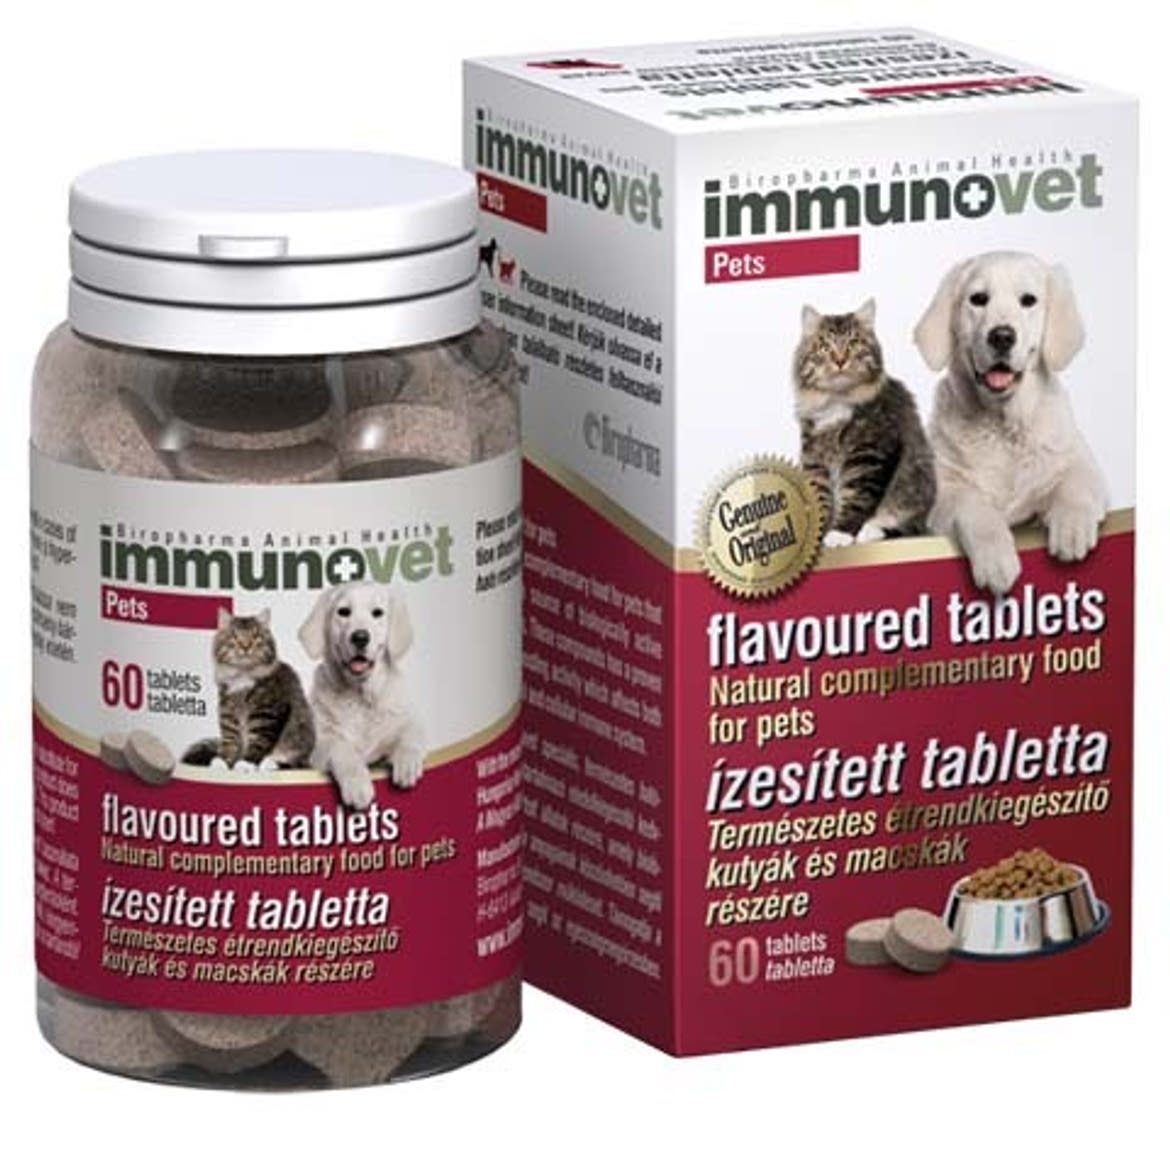 Immunovet immunerősítő ízesített tabletta